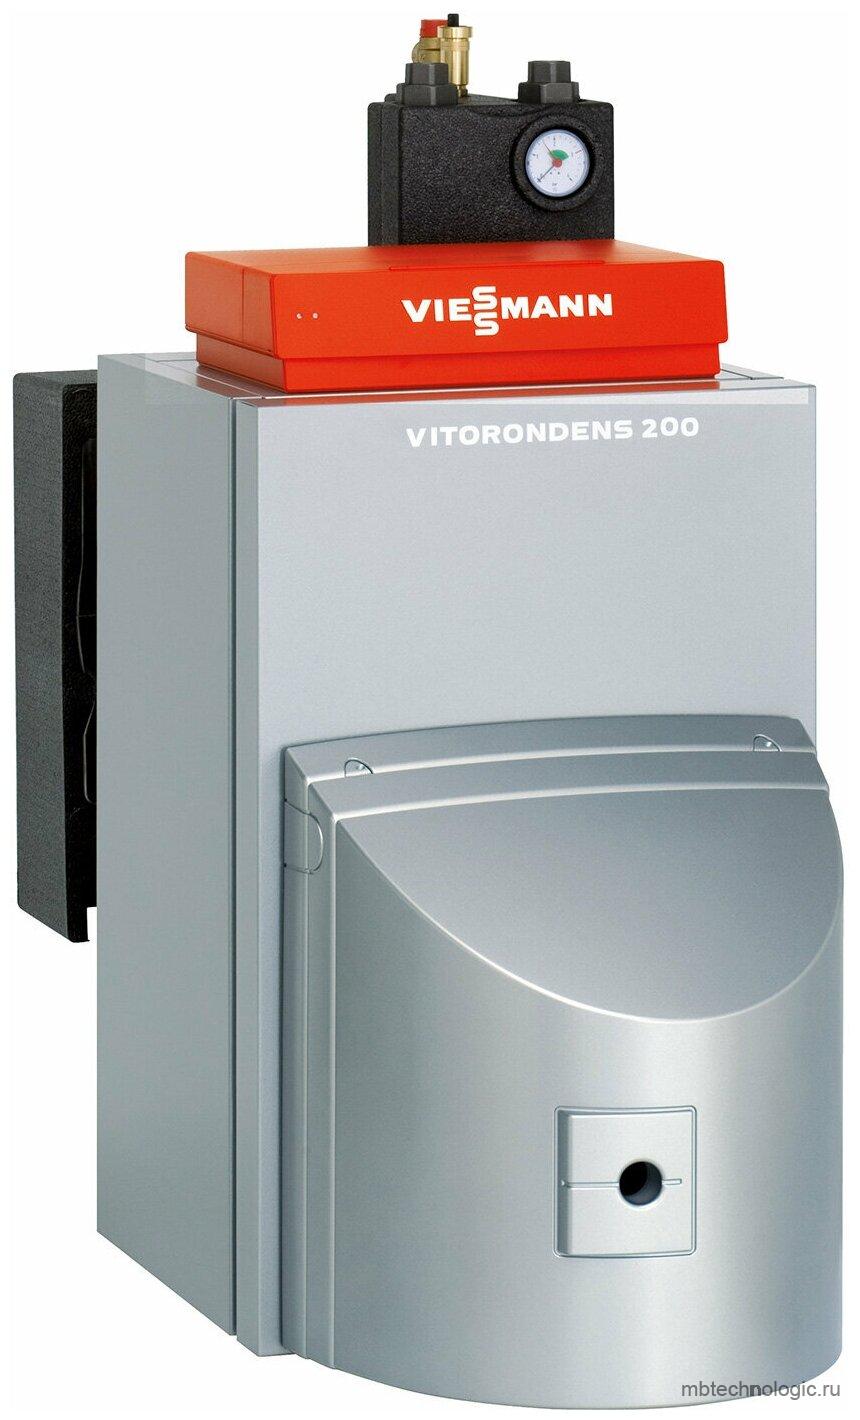 Viessmann Vitorondens 200-T BR2A036